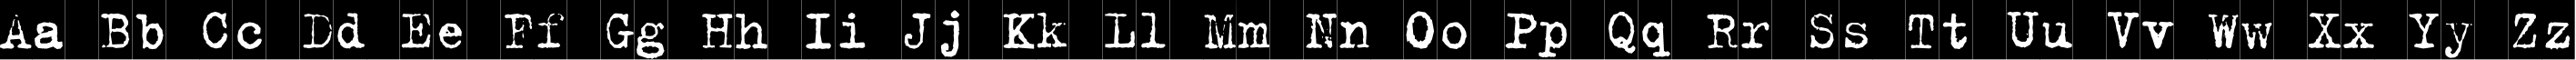 Пример написания английского алфавита шрифтом TrixieCyr-Cameo